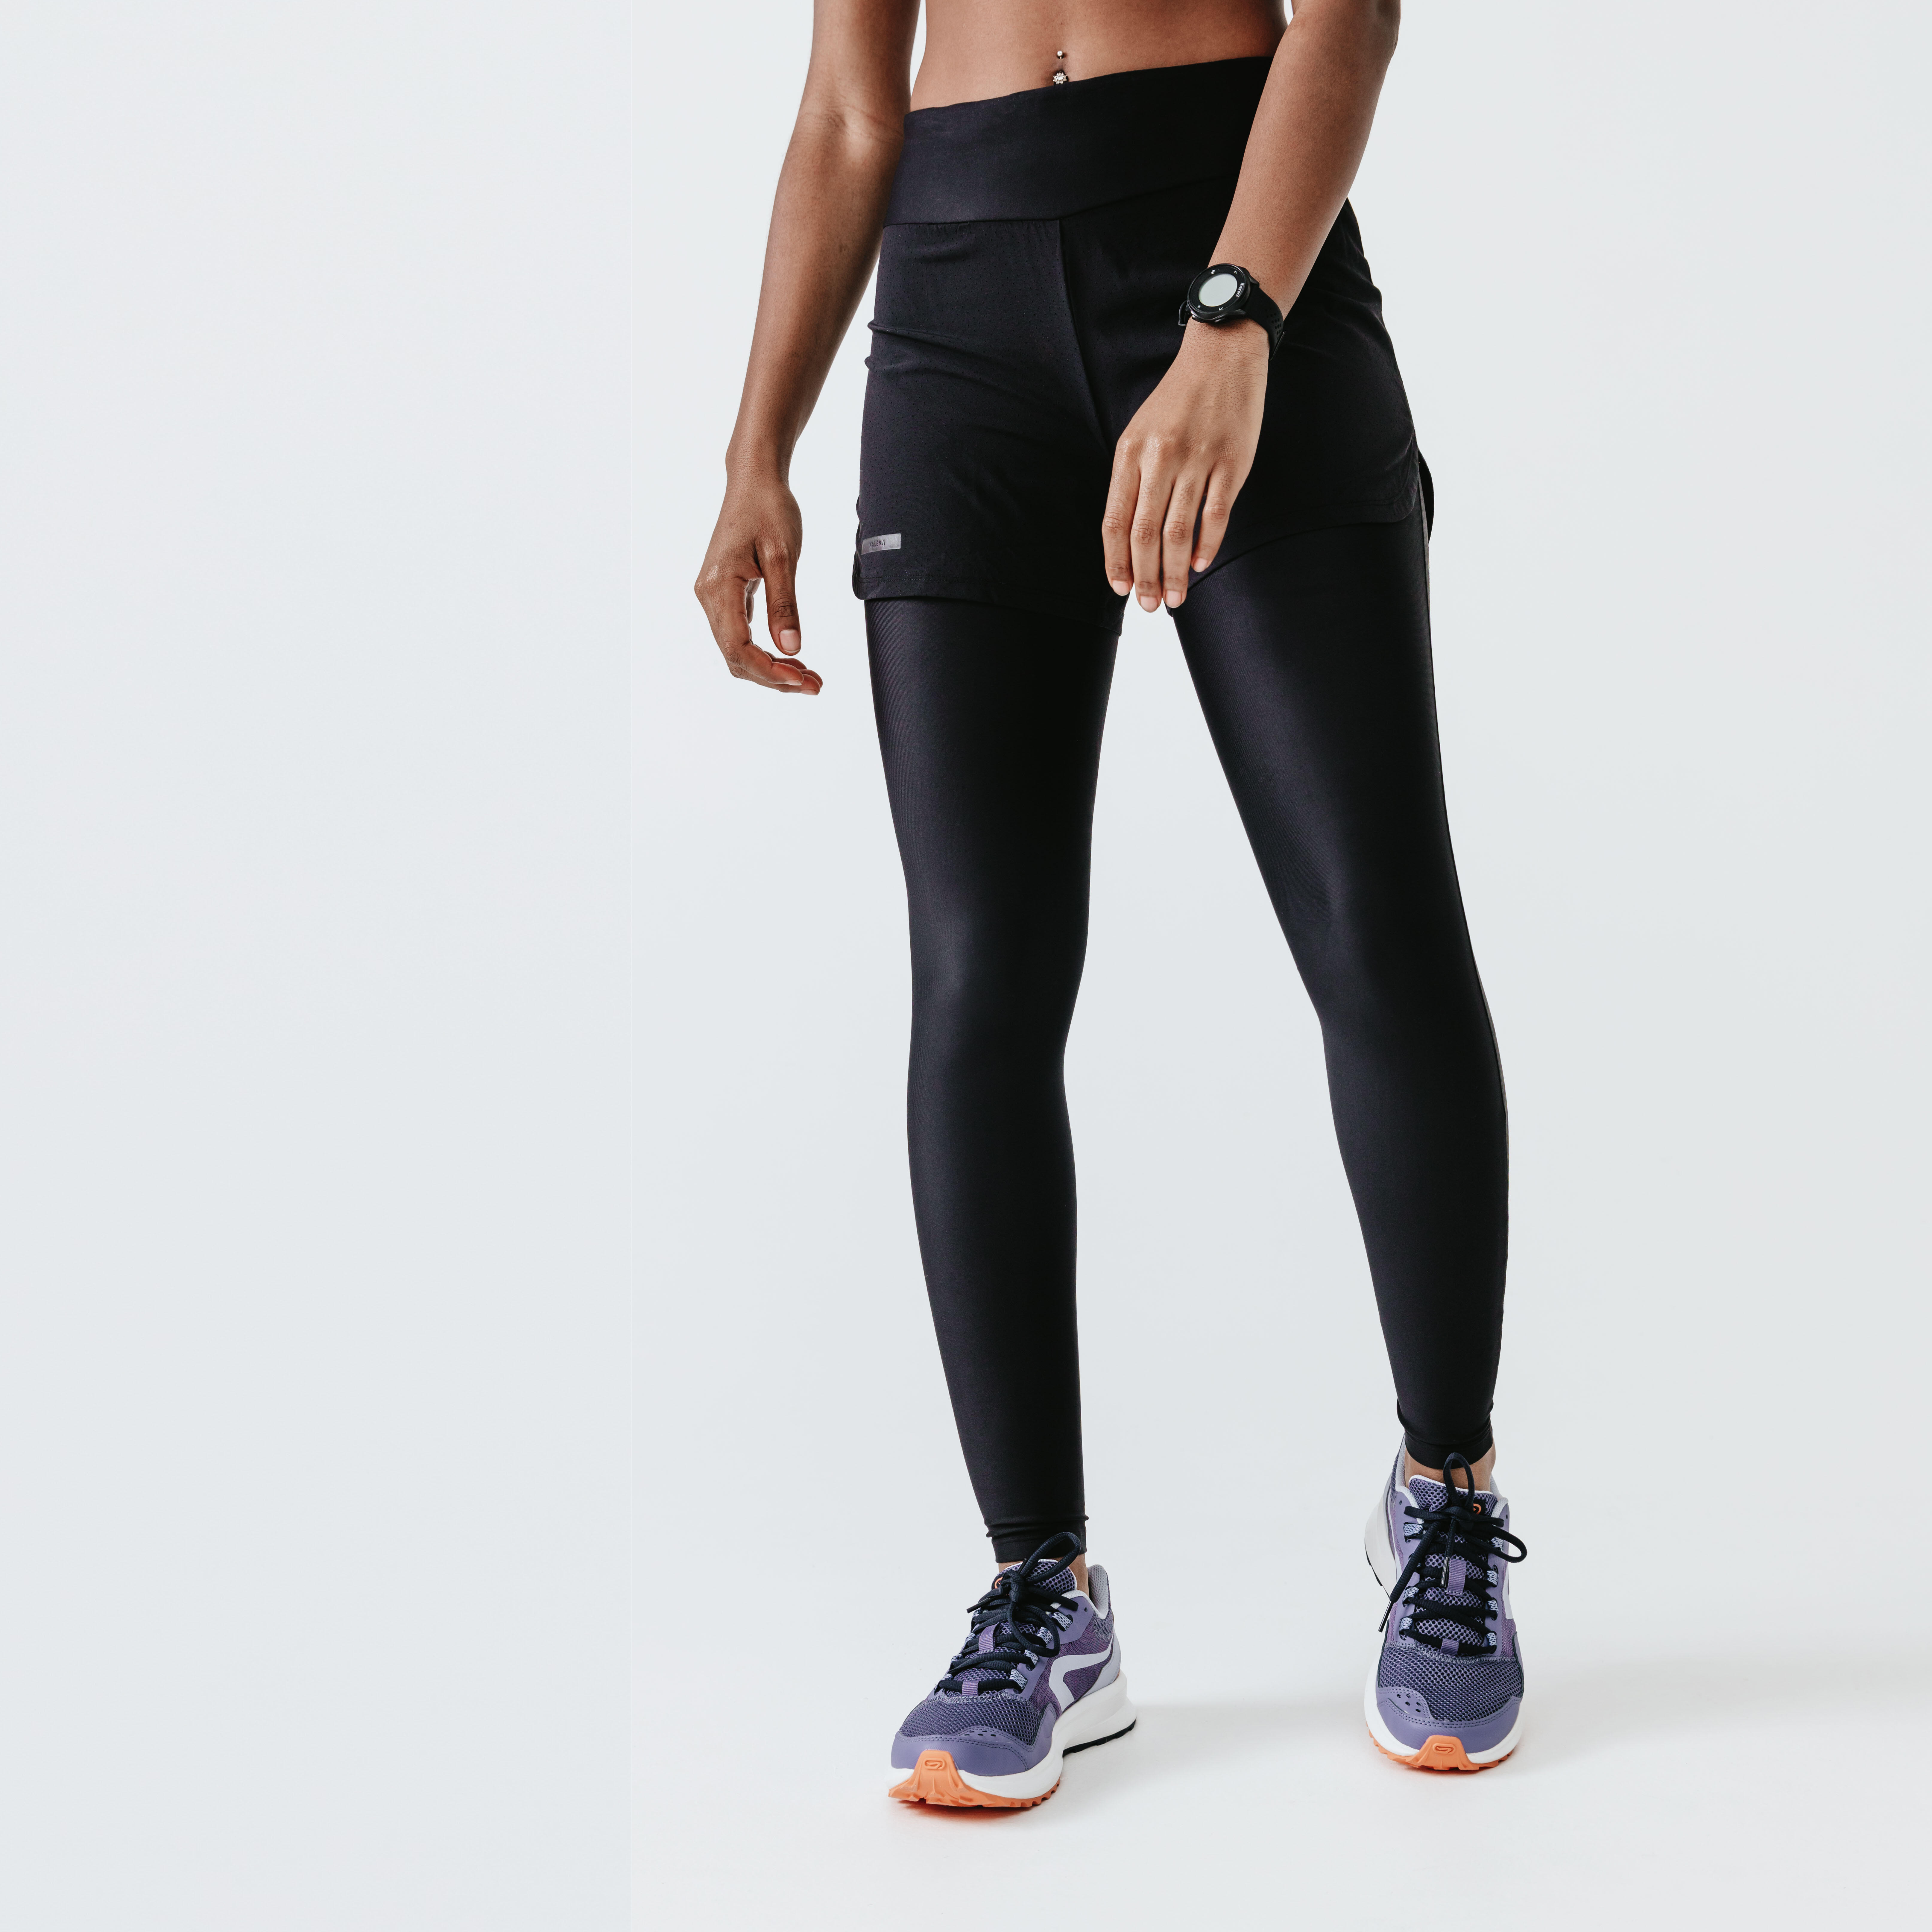 https://contents.mediadecathlon.com/p1974501/k$0ab9cde15f9e724d9620504d9260c607/run-dry-women-s-running-leggings-with-built-in-shorts-black-kalenji-8514010.jpg